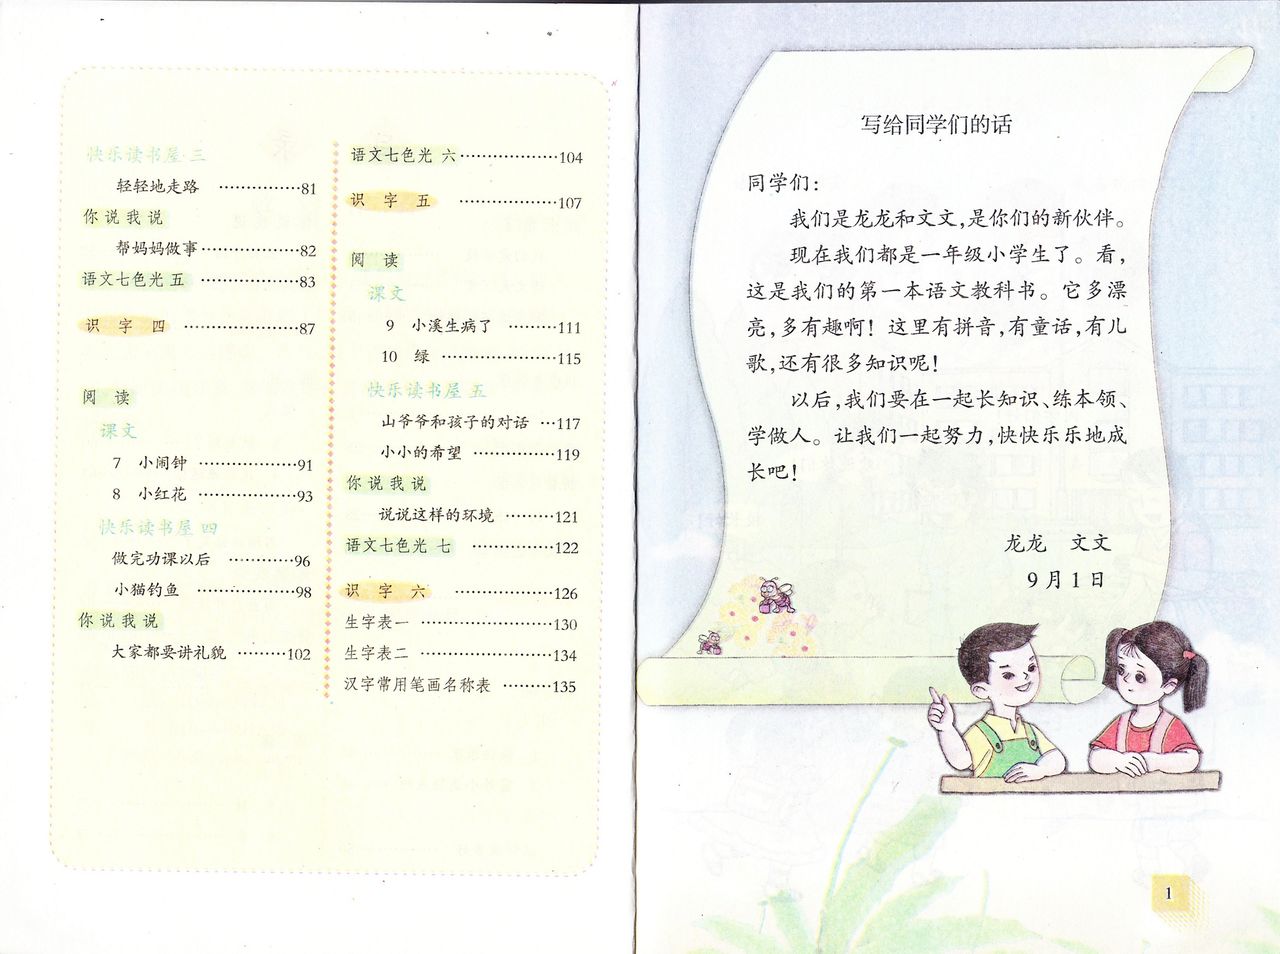 中国の小１国語教科書で中国語 語文 上 巻頭 目次 中国の小学校 国語 教科書で中国語を勉強